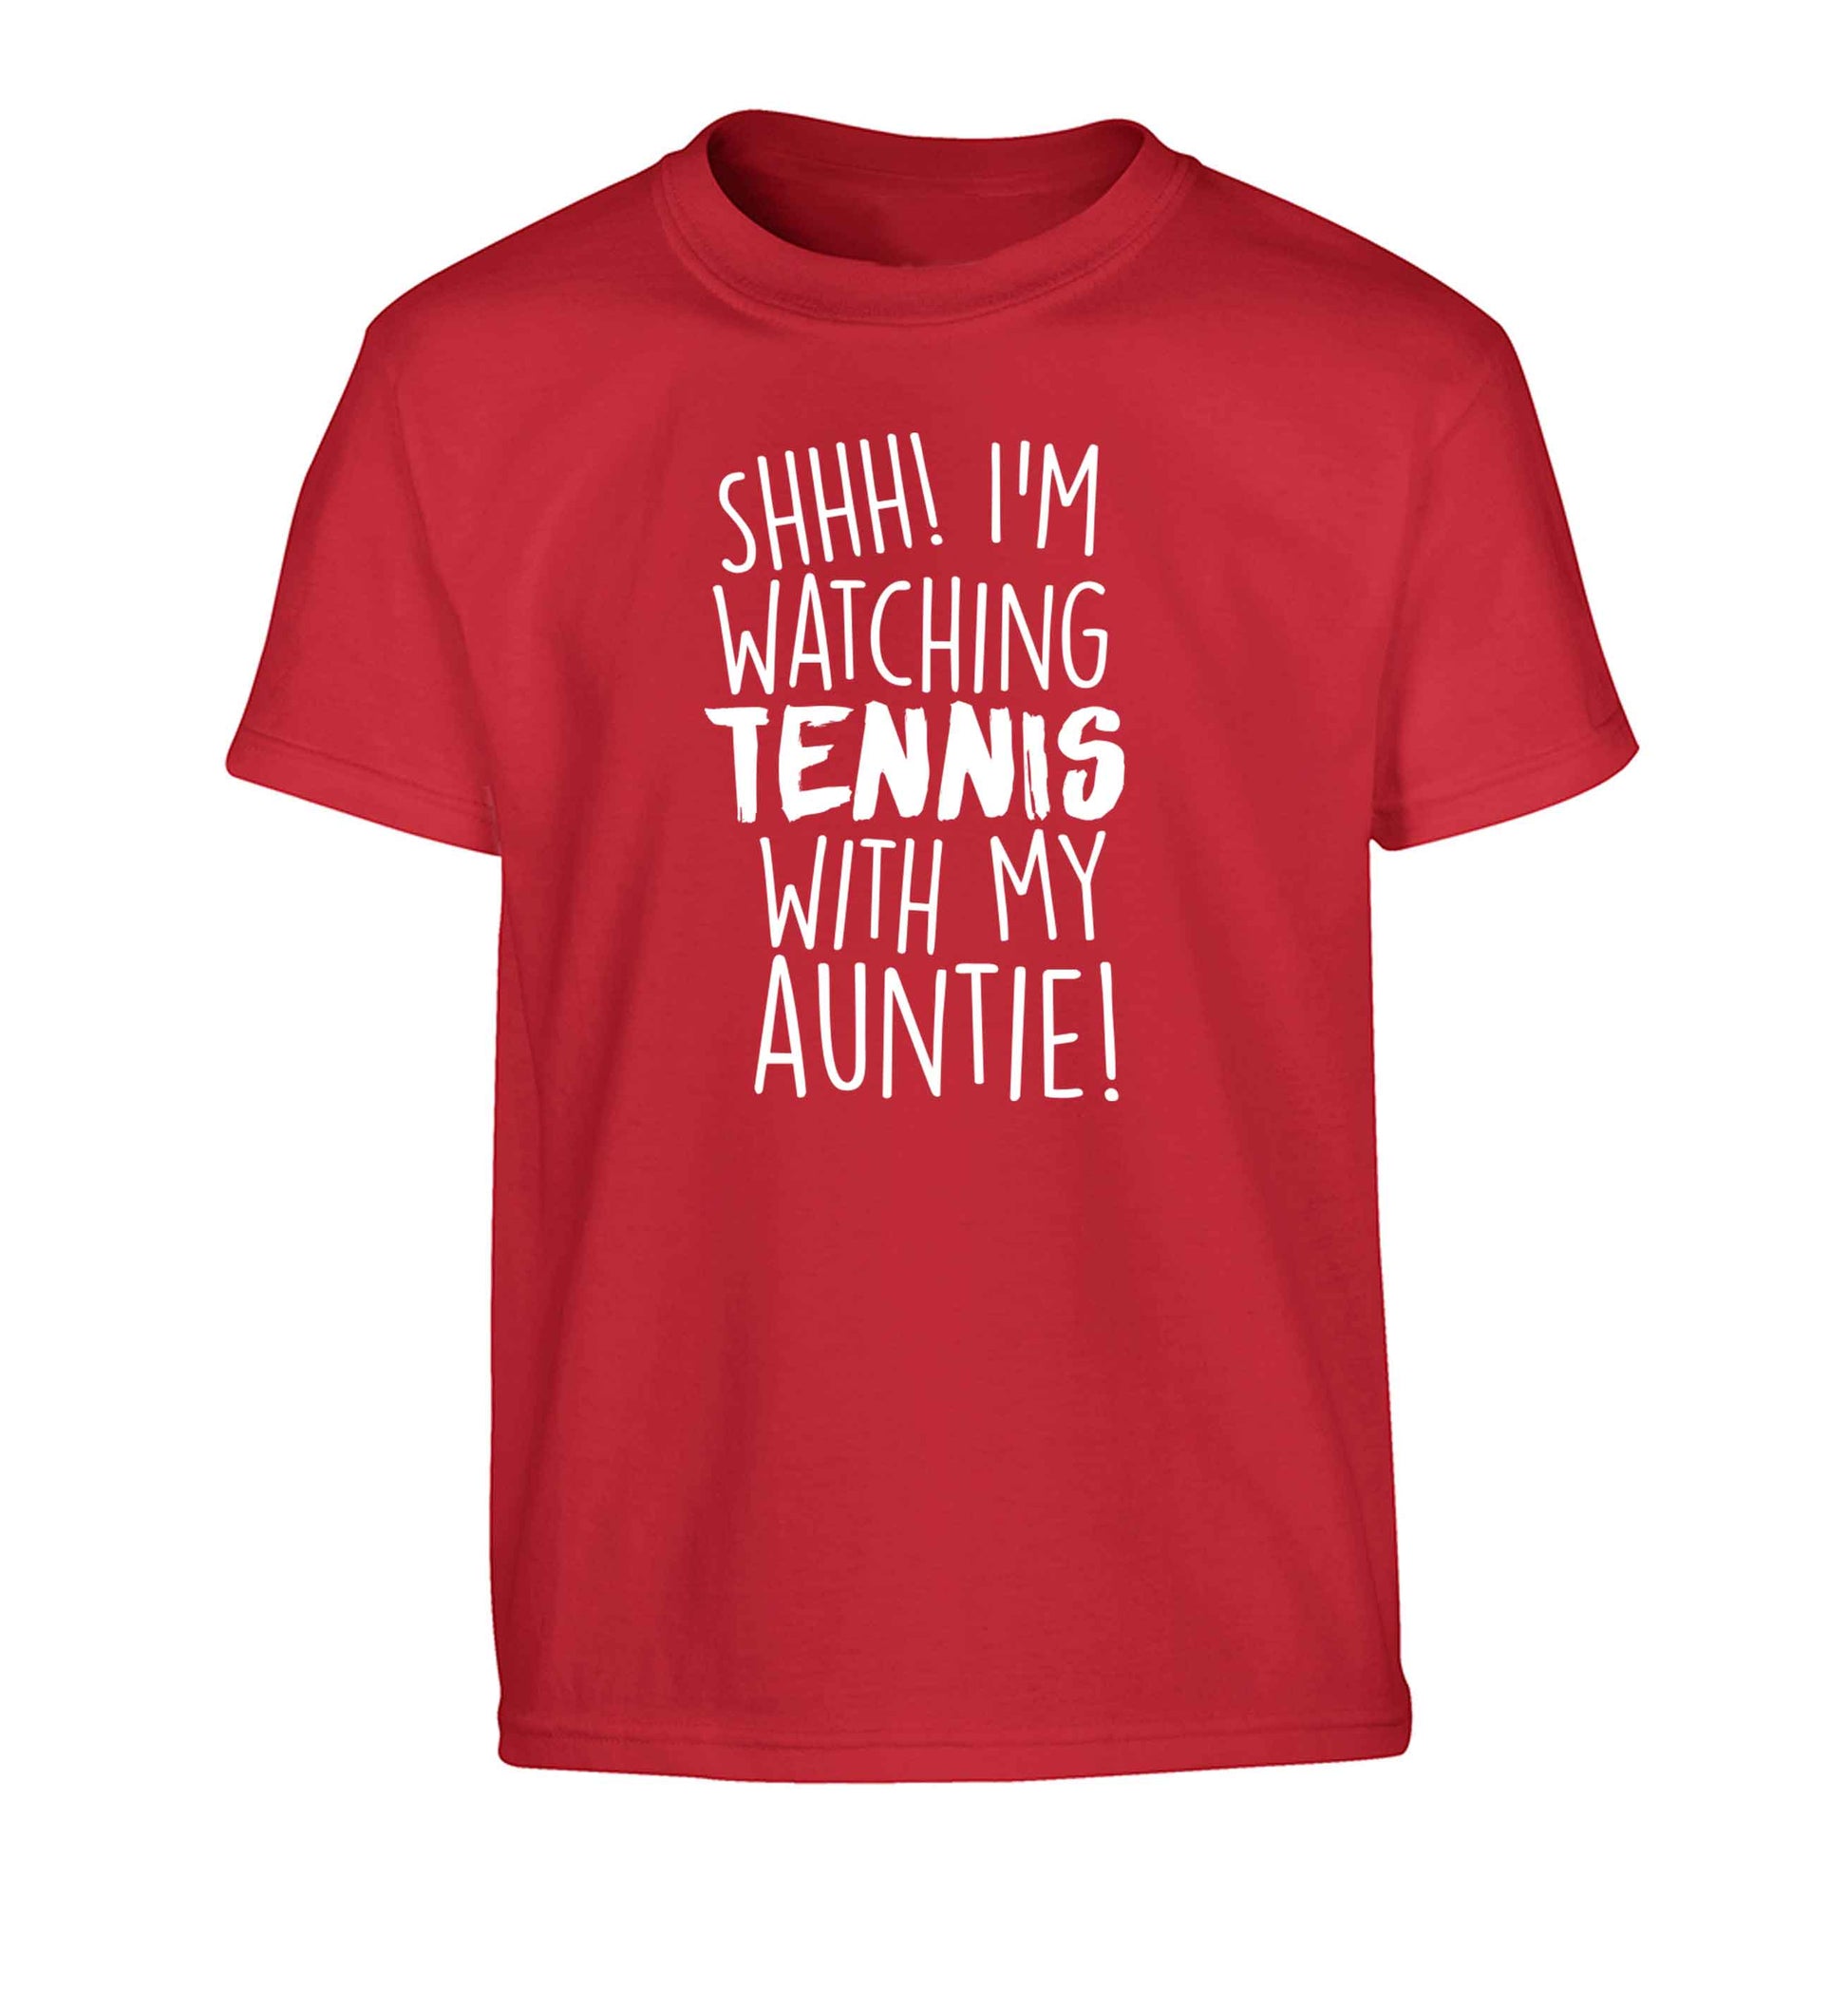 Shh! I'm watching tennis with my auntie! Children's red Tshirt 12-13 Years